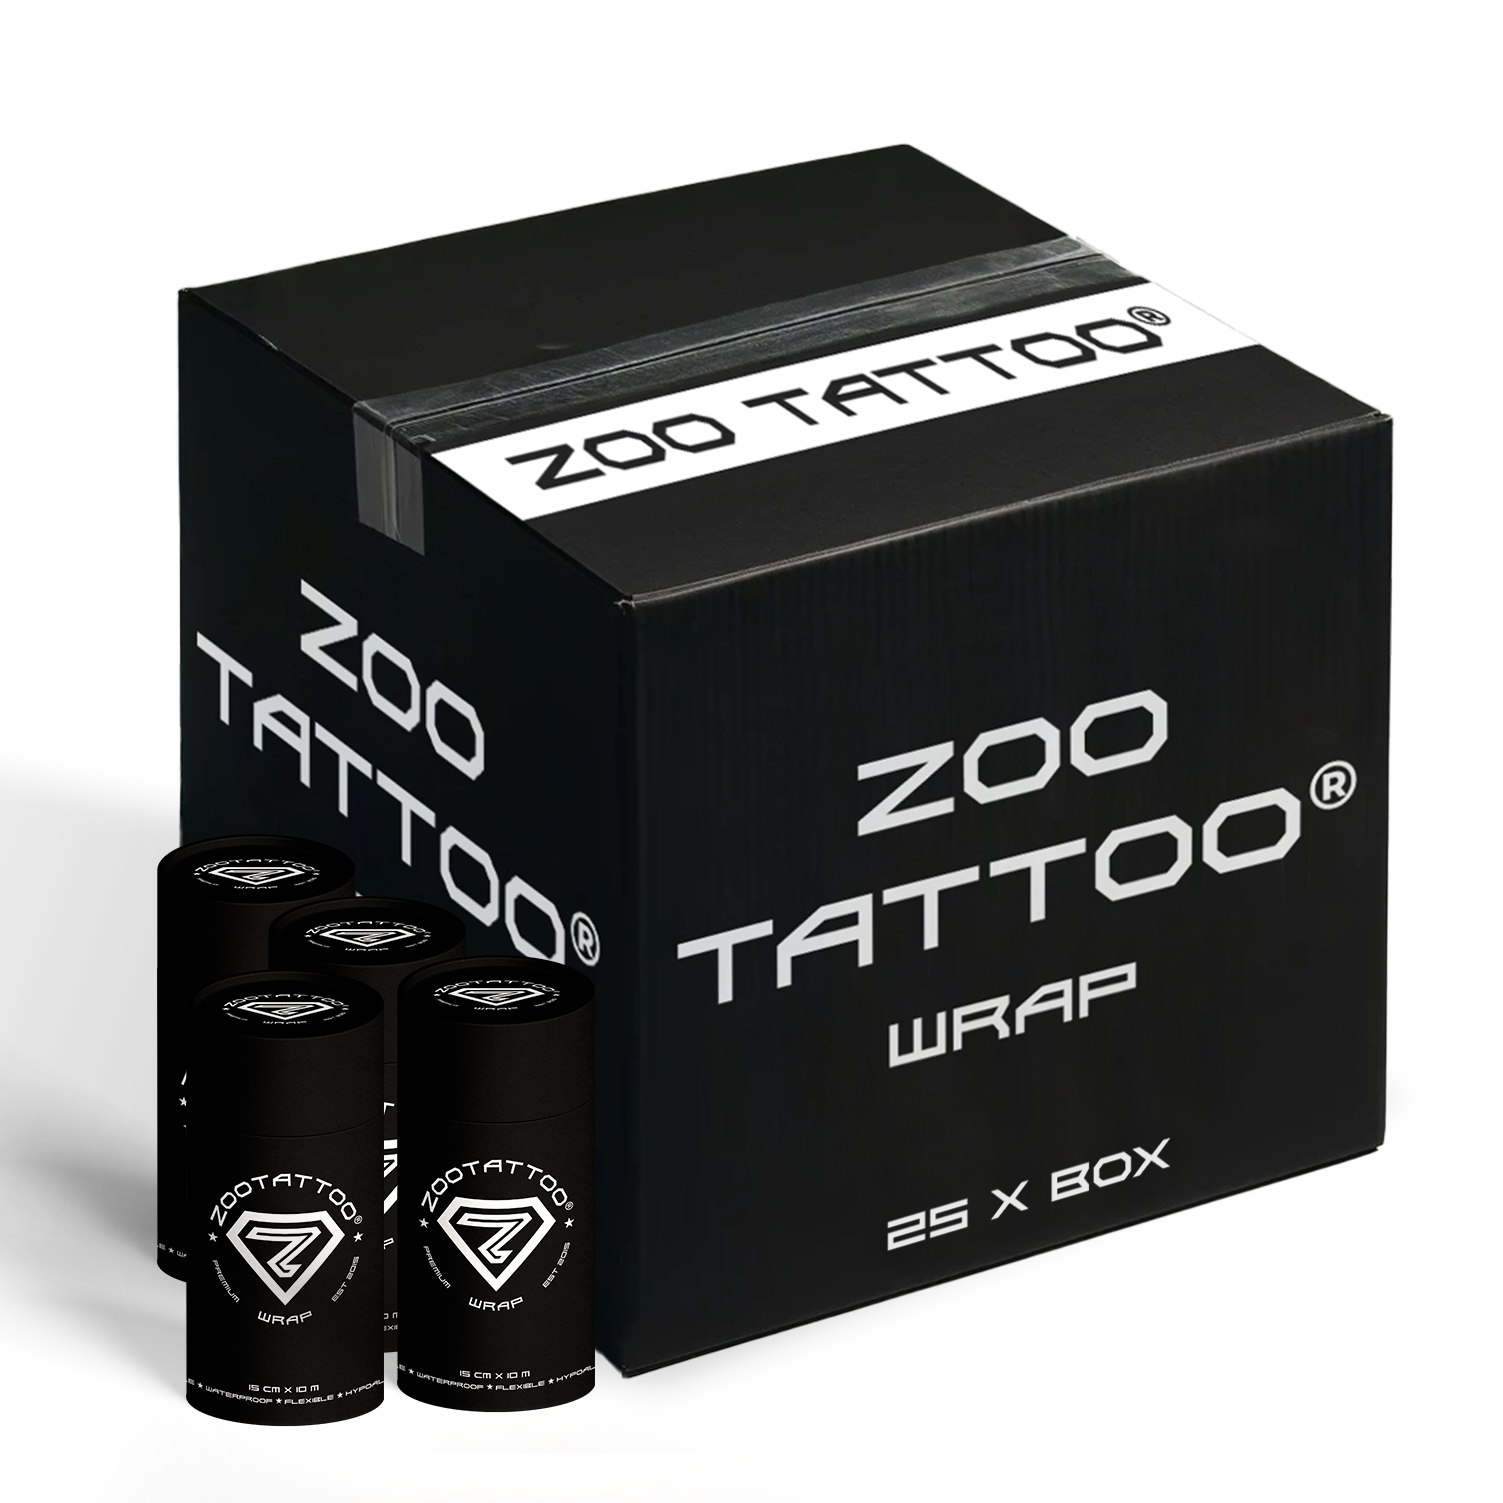 ZOOTATTOO® Wrap Wholesale 25 Box